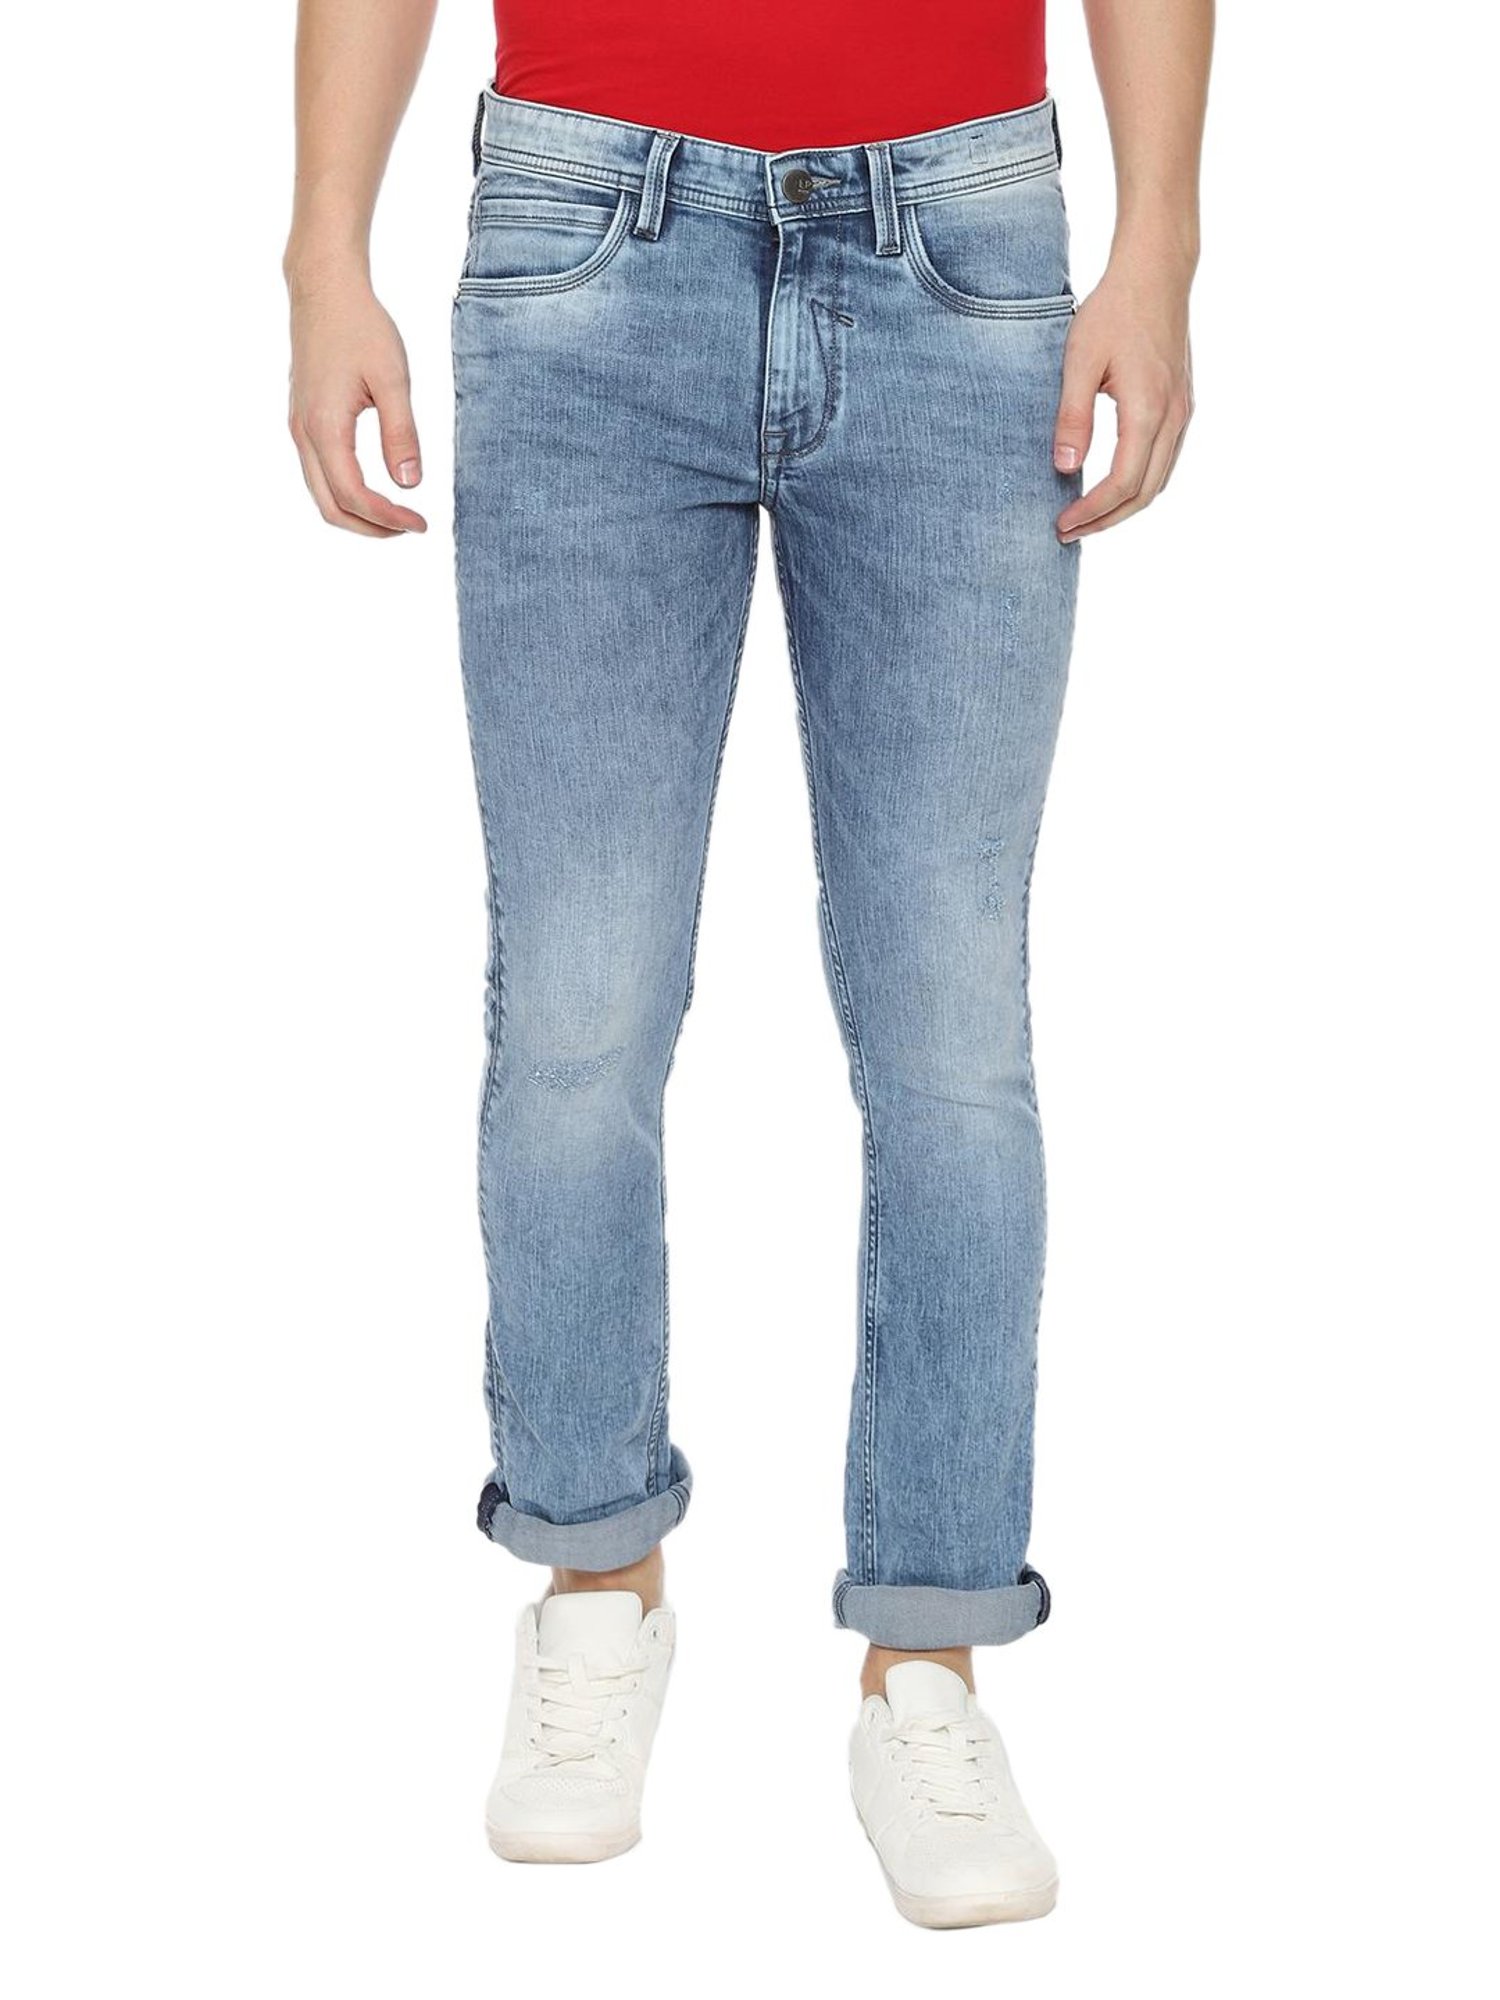 louis phillipe jeans